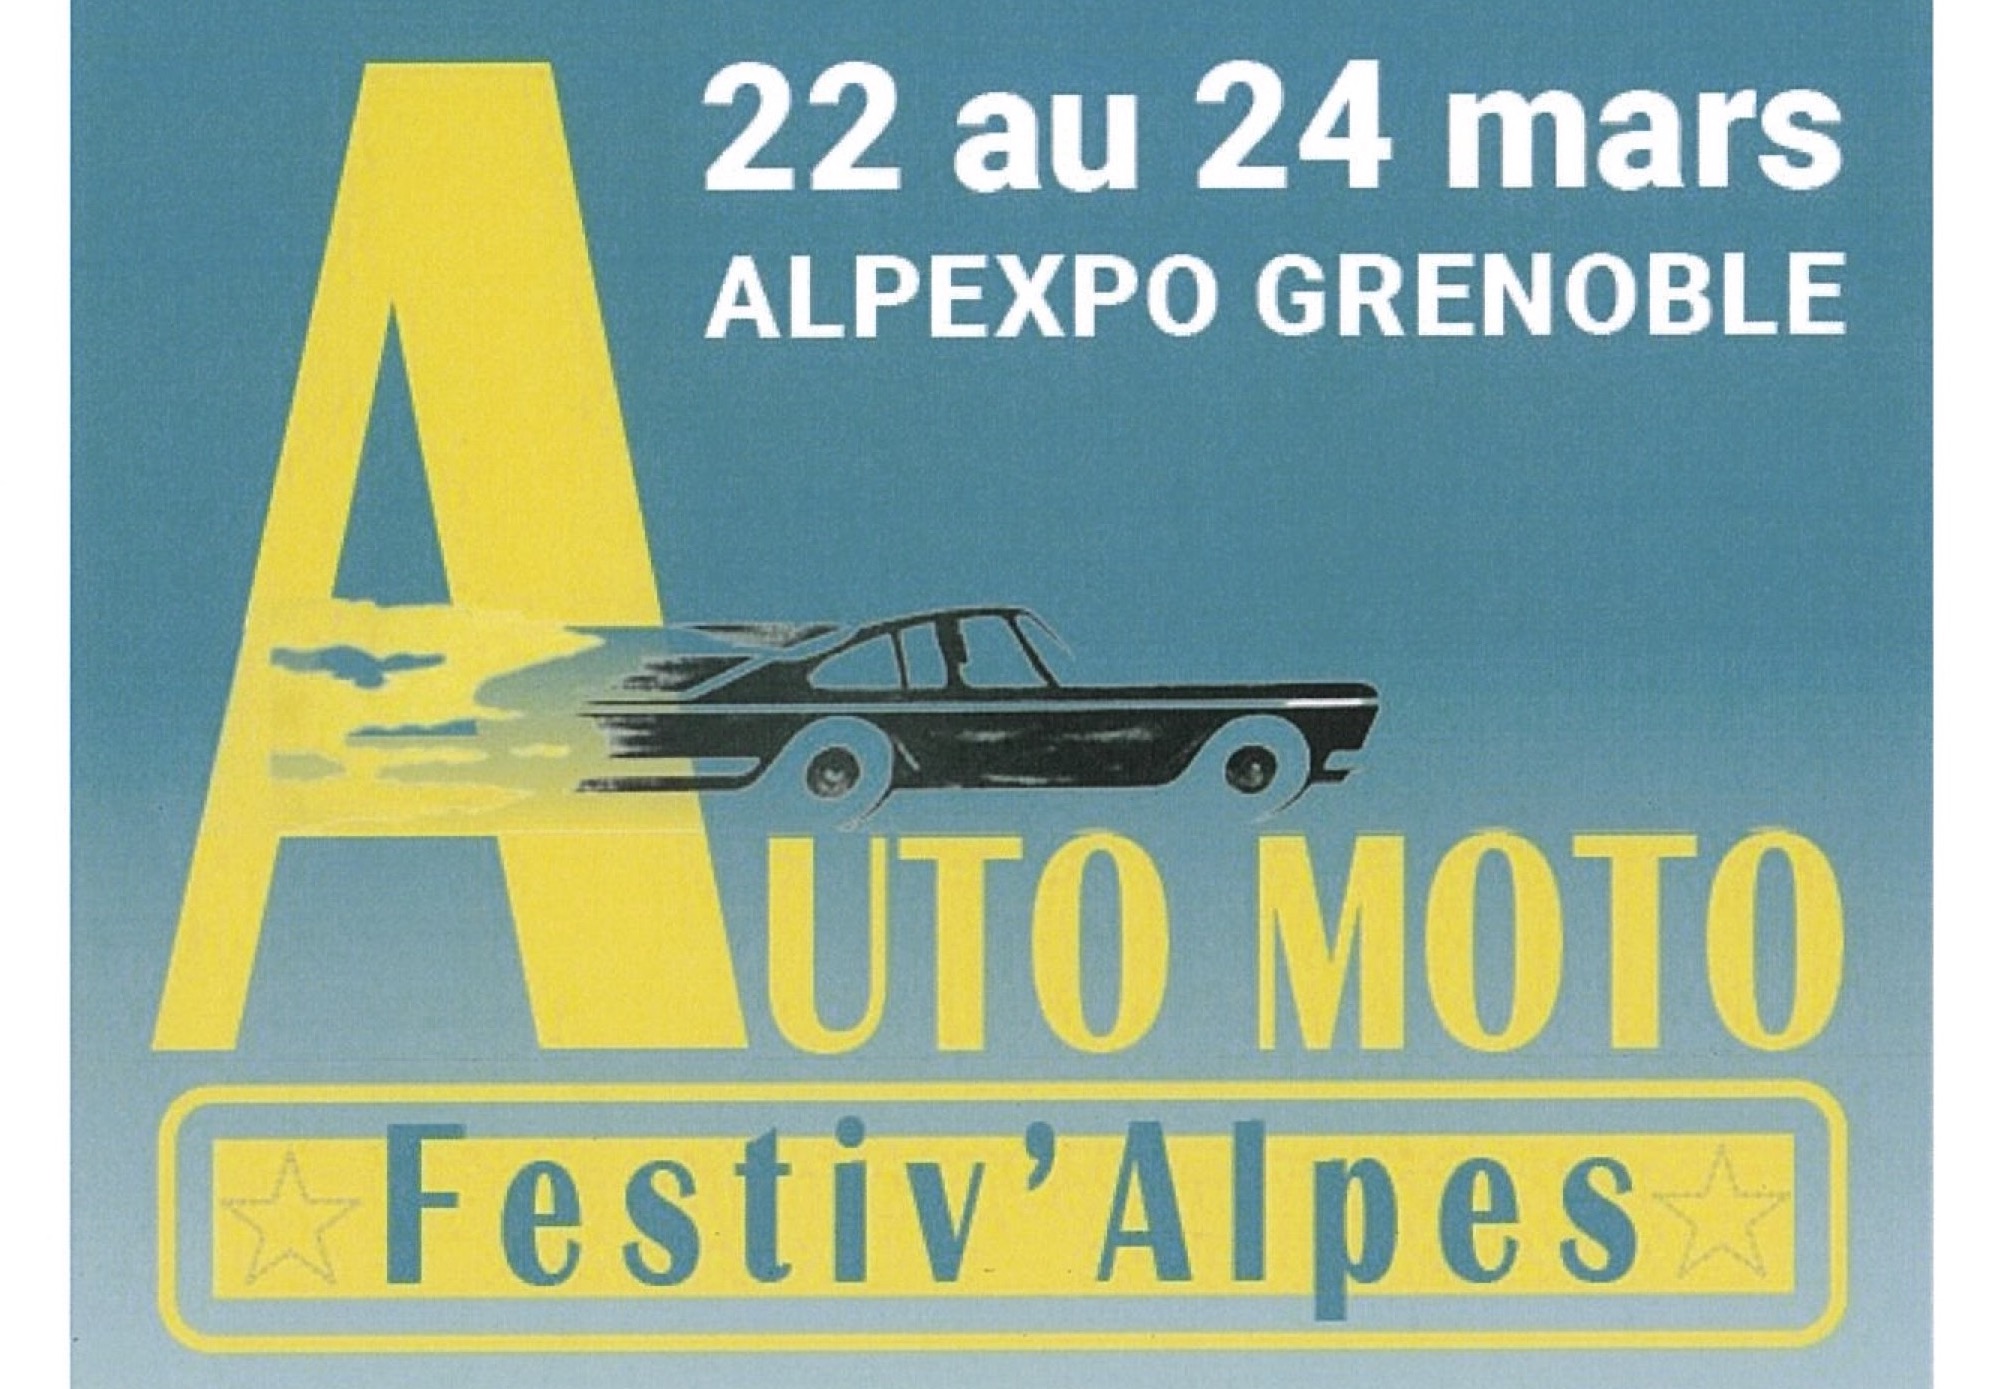 Auto-moto Festivalpes Grenoble du 22 au 24 mars